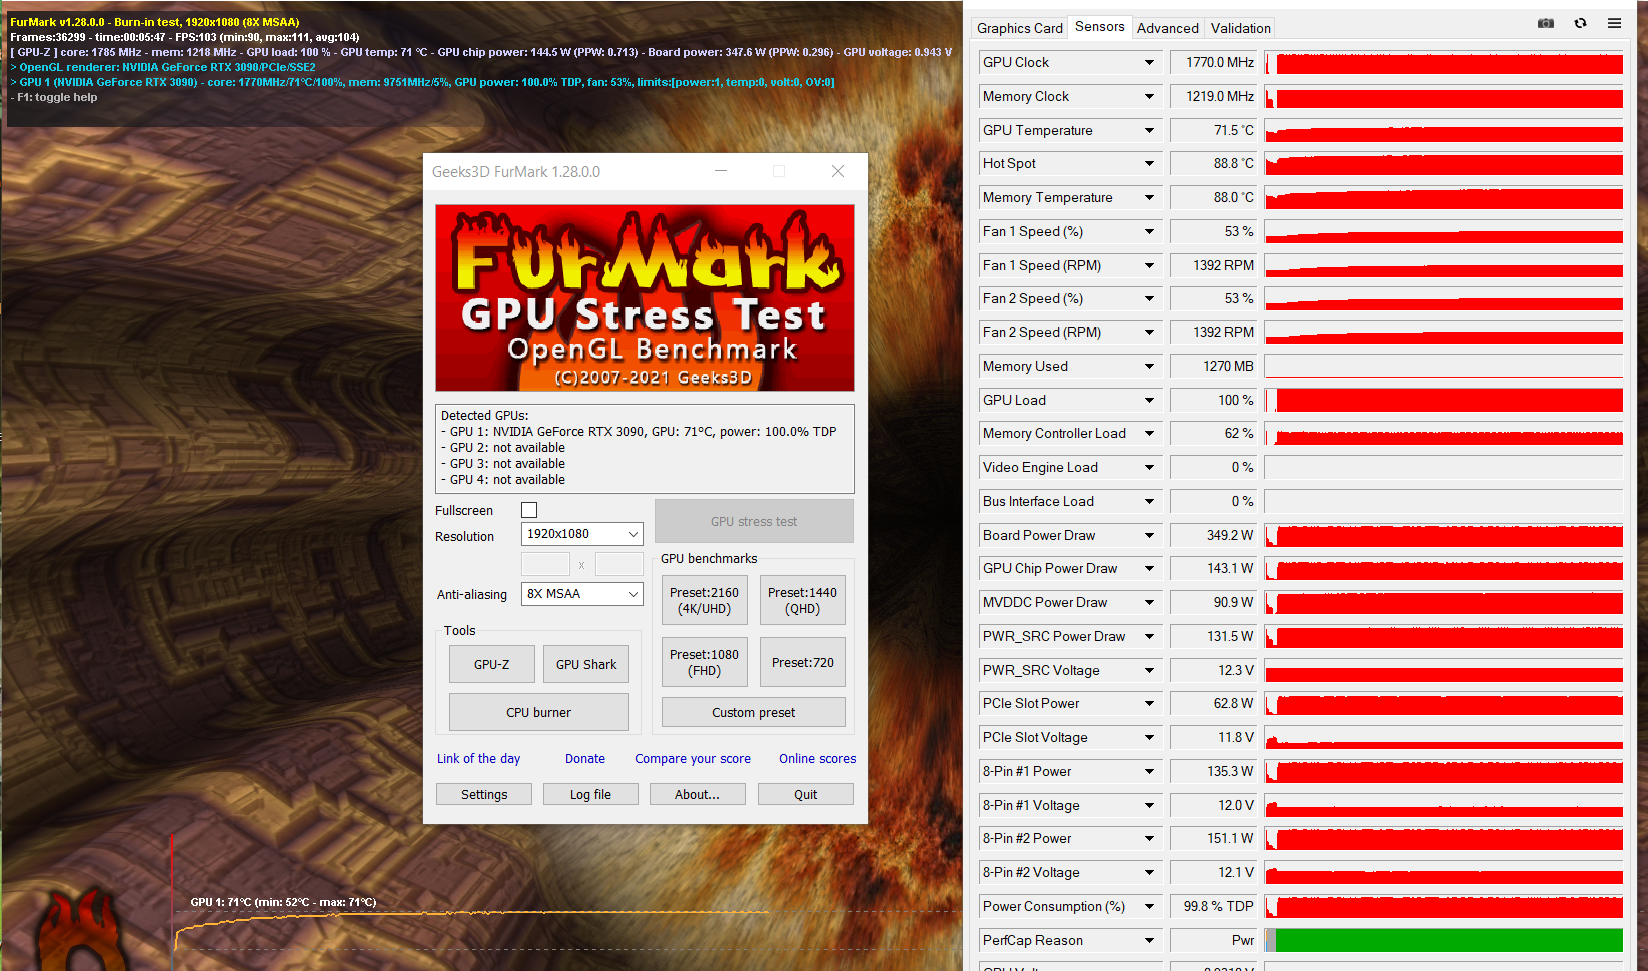 2021-11-10 08_36_26-Geeks3D FurMark v1.28.0.0 - 109FPS, GPU1 temp_71°C, GPU1 usage_100%.png